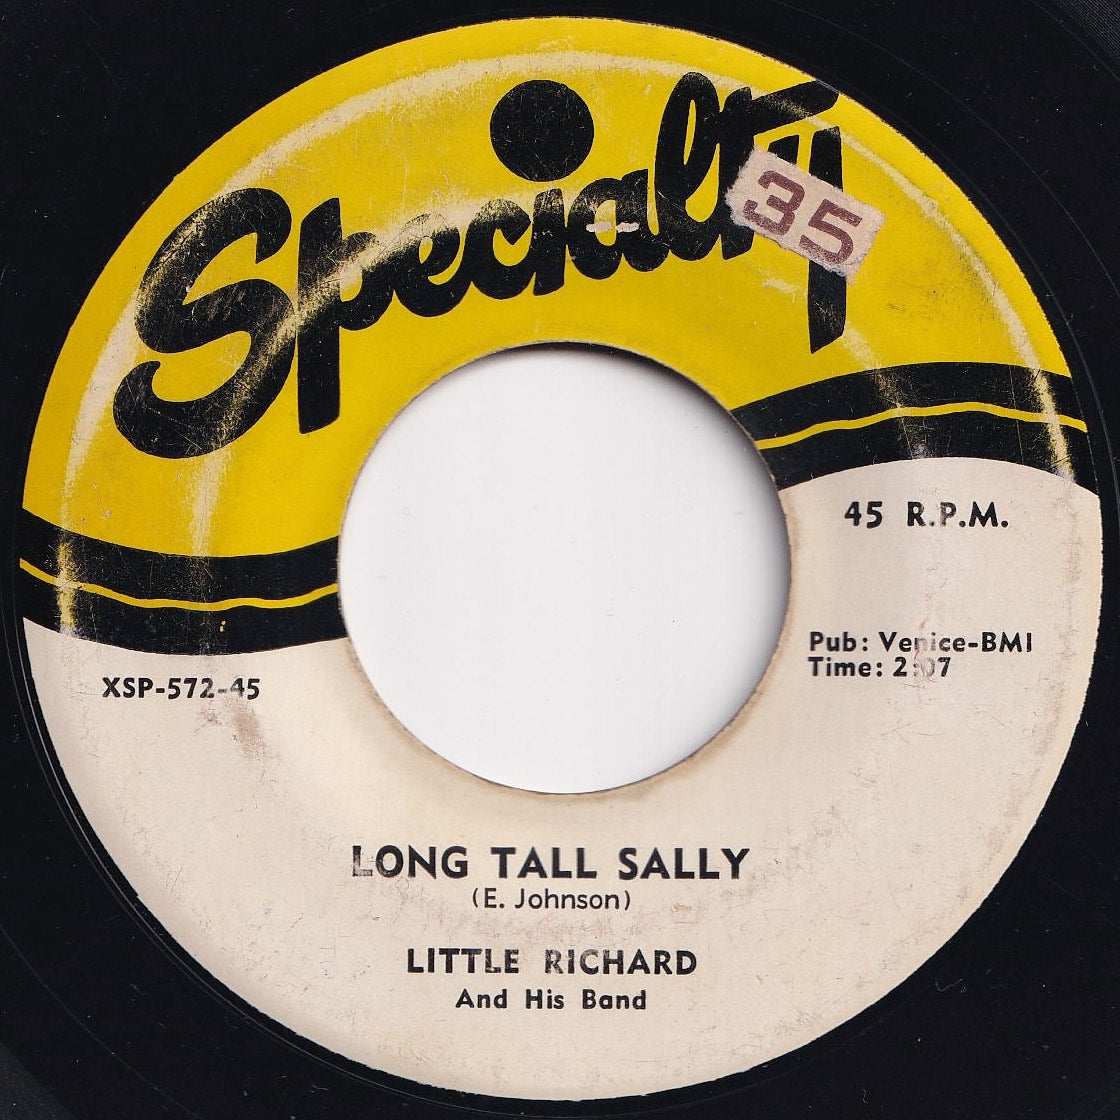 Long Tall Sally Band